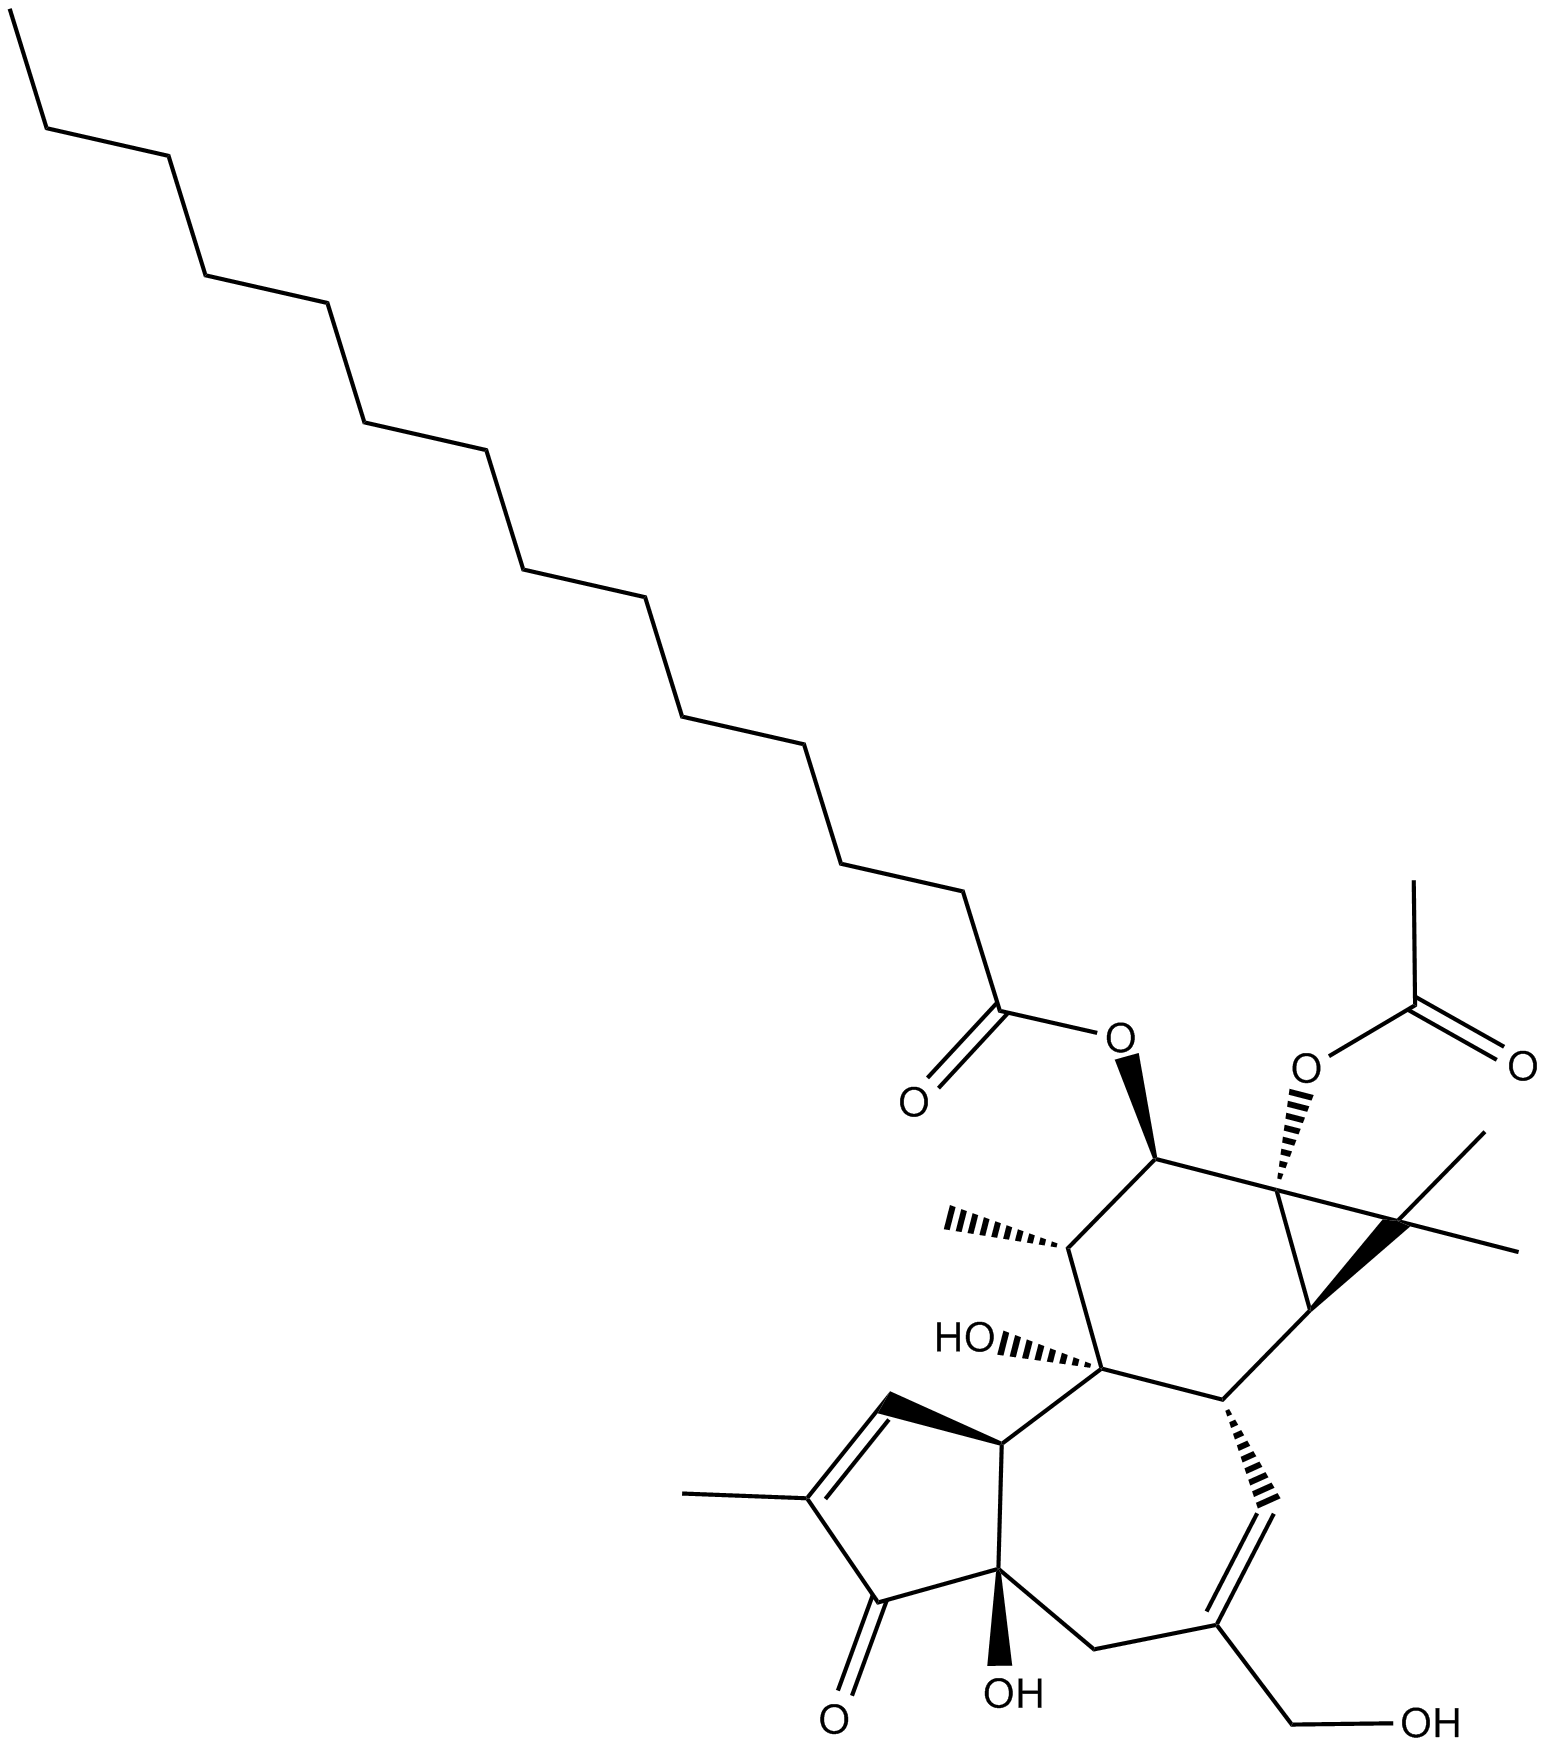 12-O-tetradecanoyl phorbol-13-acetate (PMA)